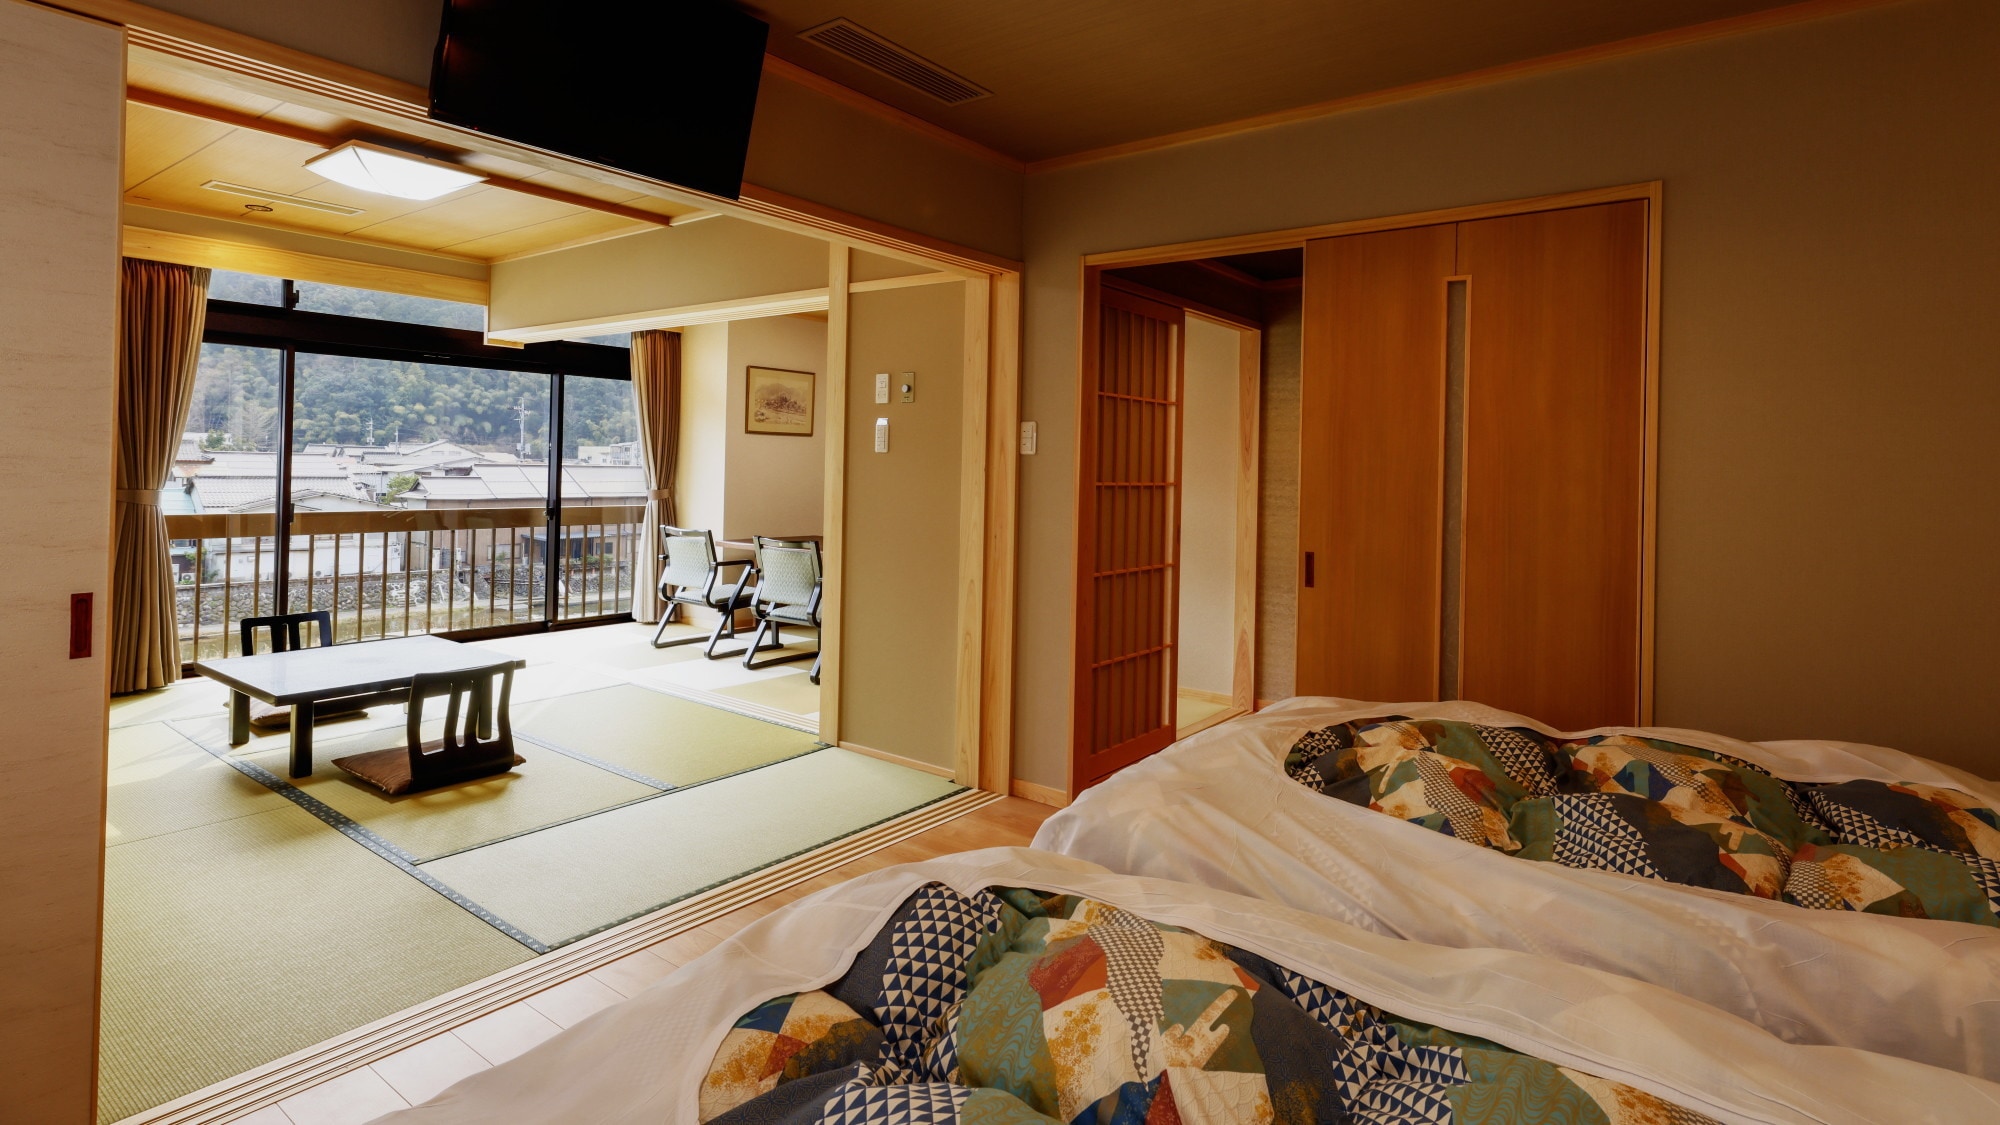 ■Junior suite with semi open-air bath "Sasafune/Tsukifune"